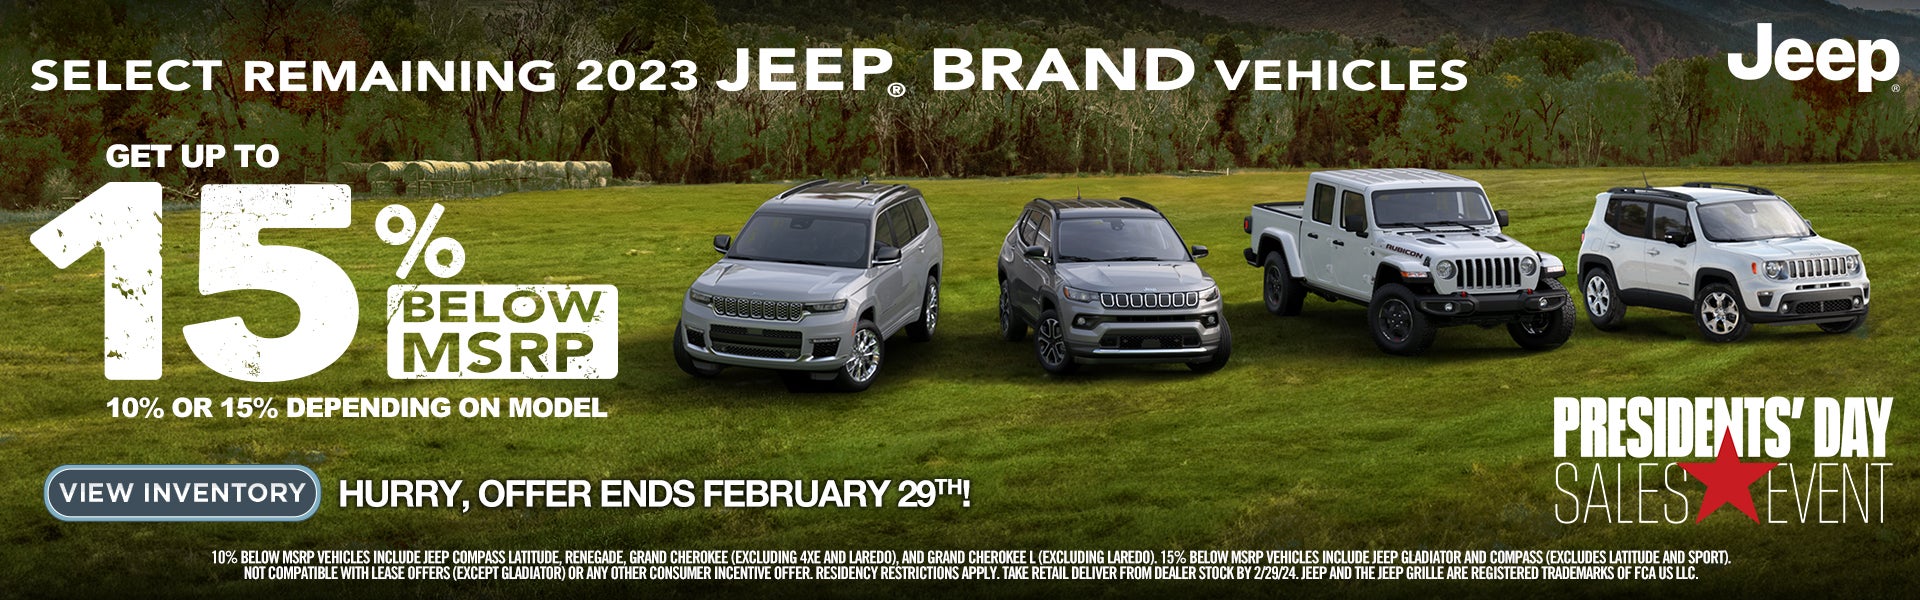 2023 Jeep Brand Vehicles